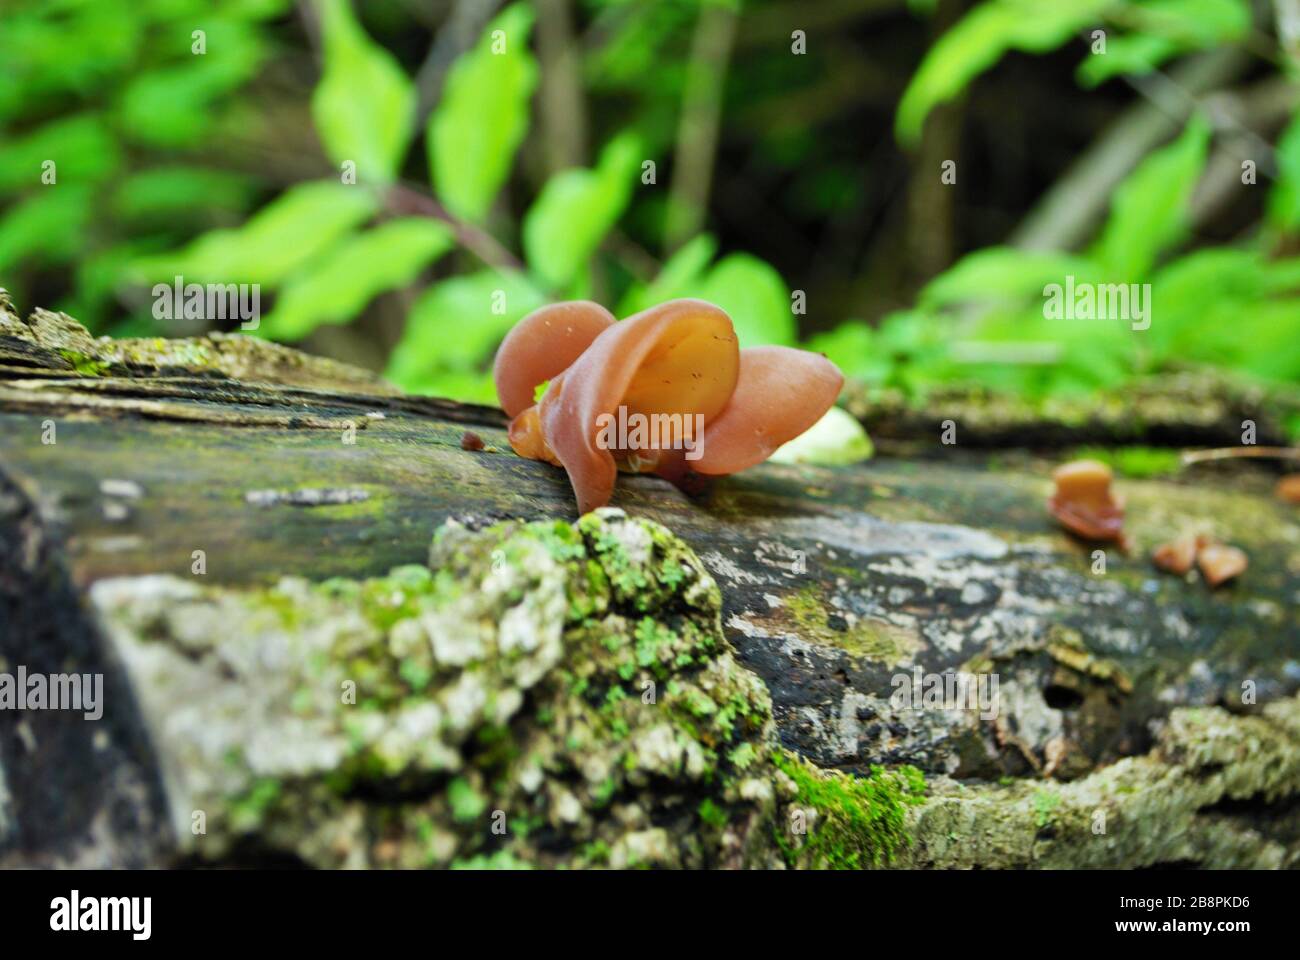 Jew’s ear fungus growing on a fallen tree in the woods Stock Photo